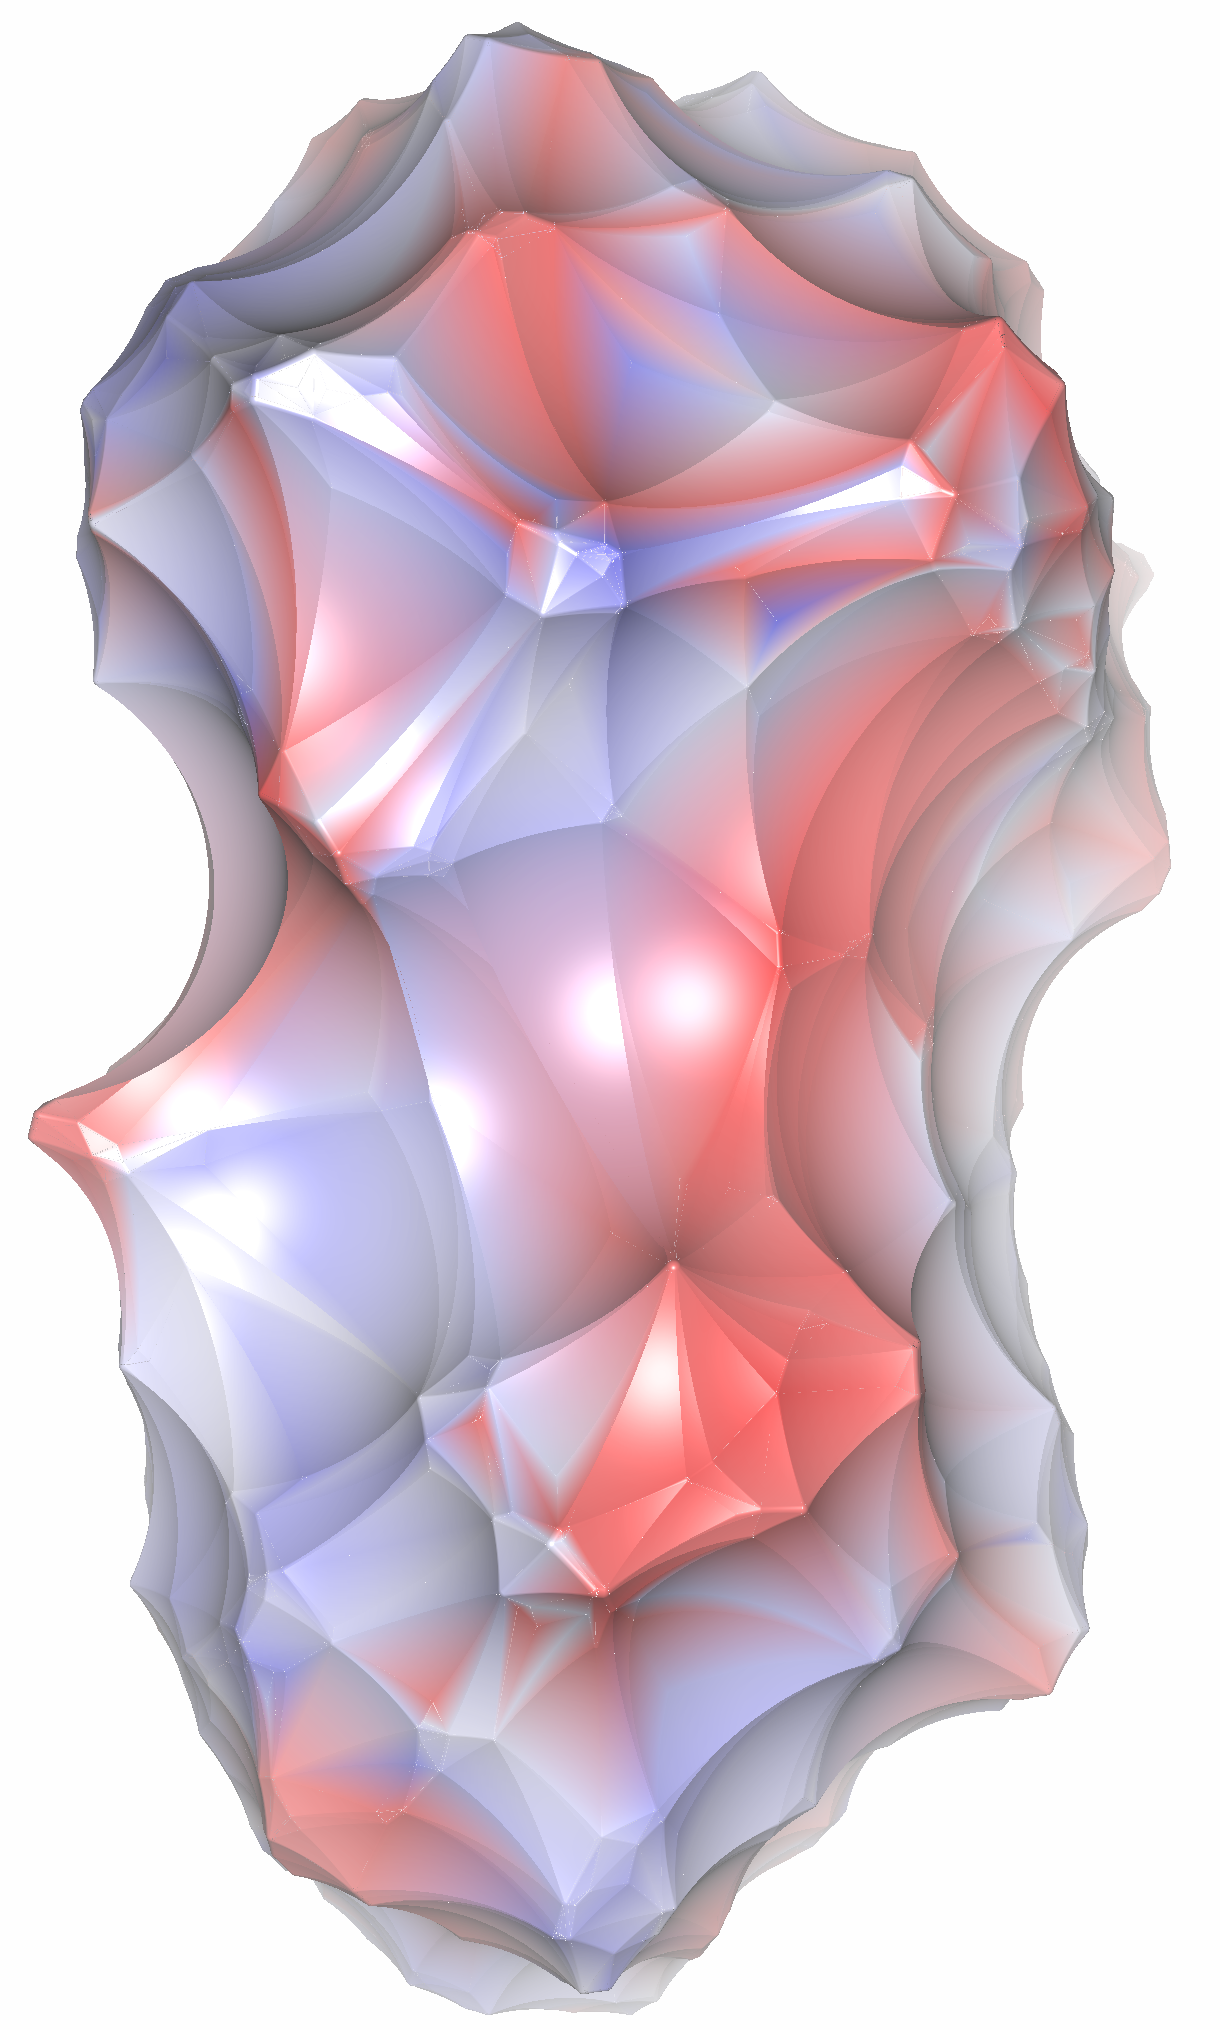 Molecular surface of a ribosomal sub-unit, large probe.